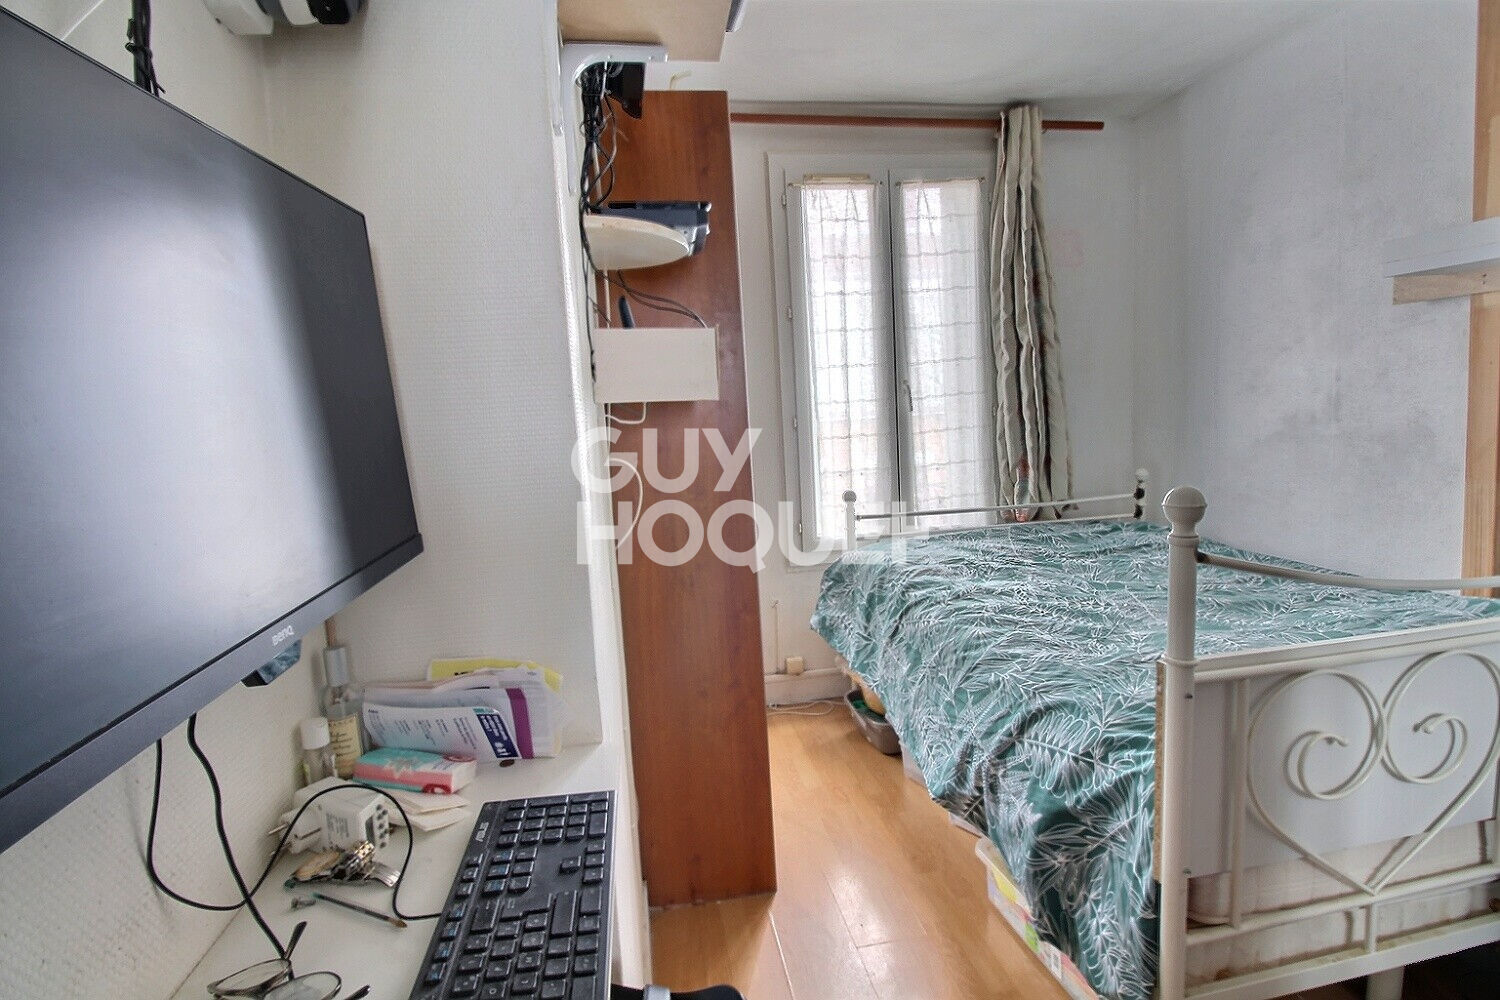 Appartement a louer malakoff - 1 pièce(s) - 17.83 m2 - Surfyn